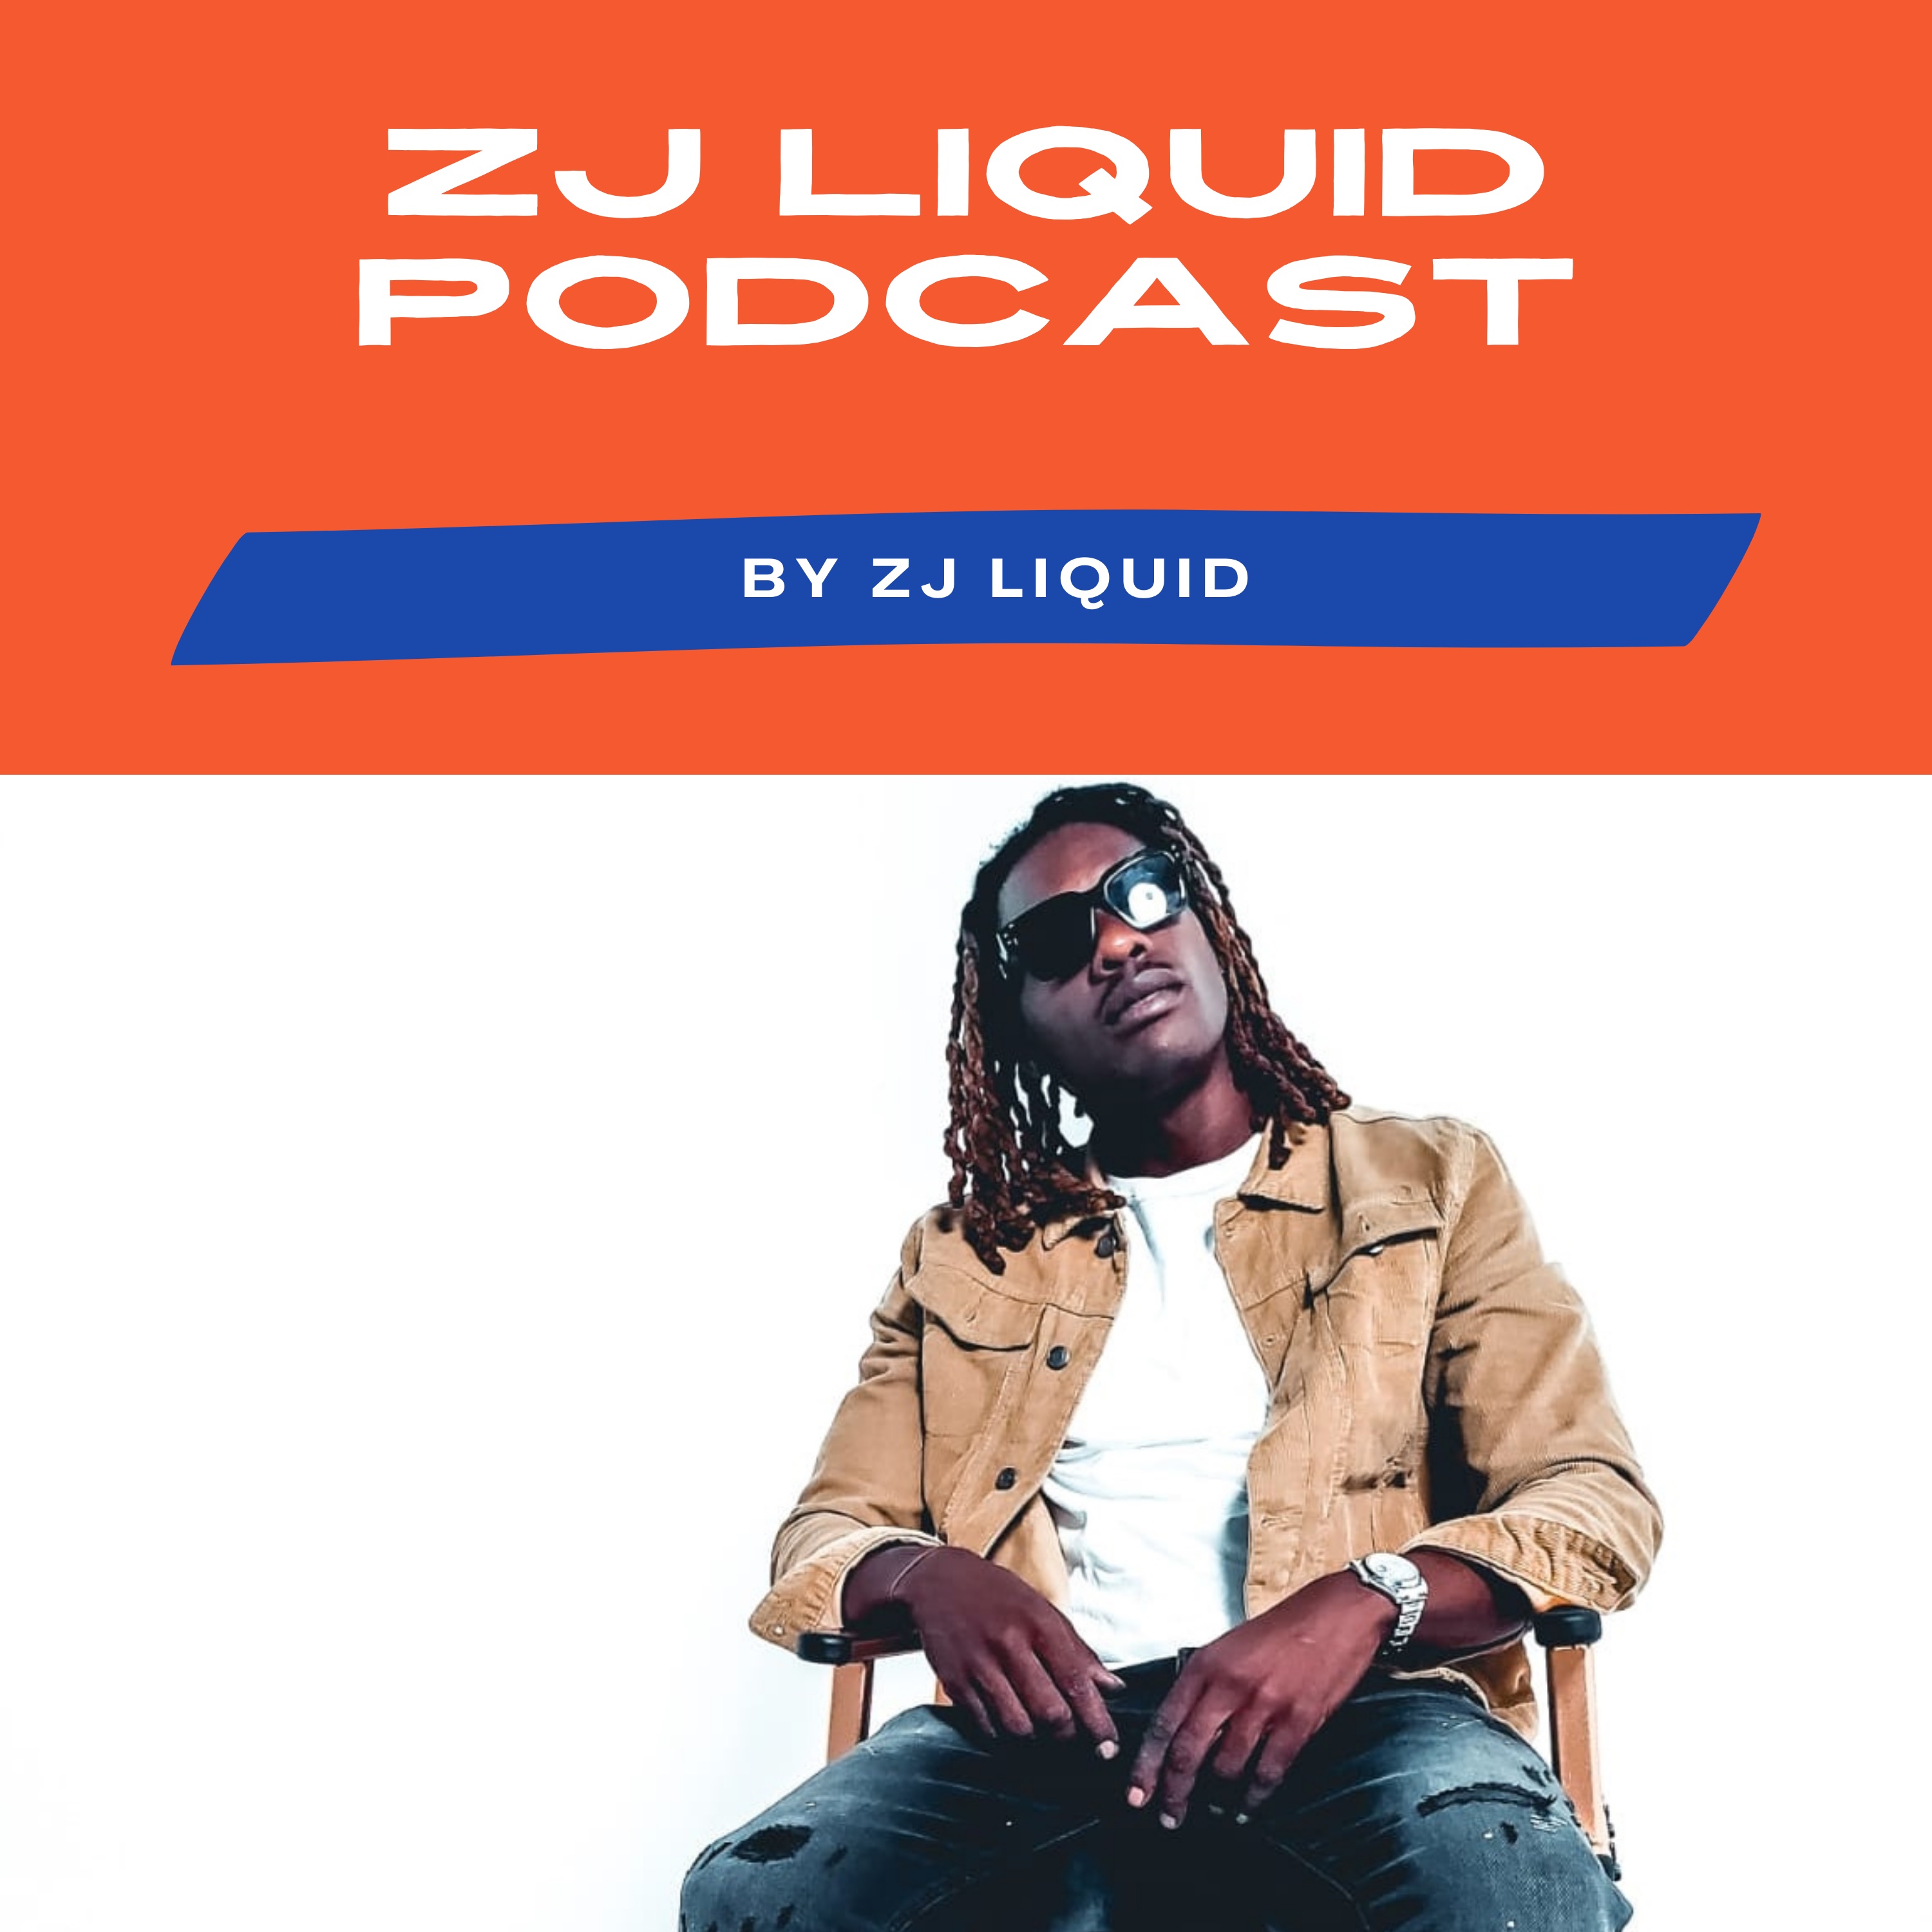 ZJ LIQUID PODCAST  Podcast by Zj Liquid